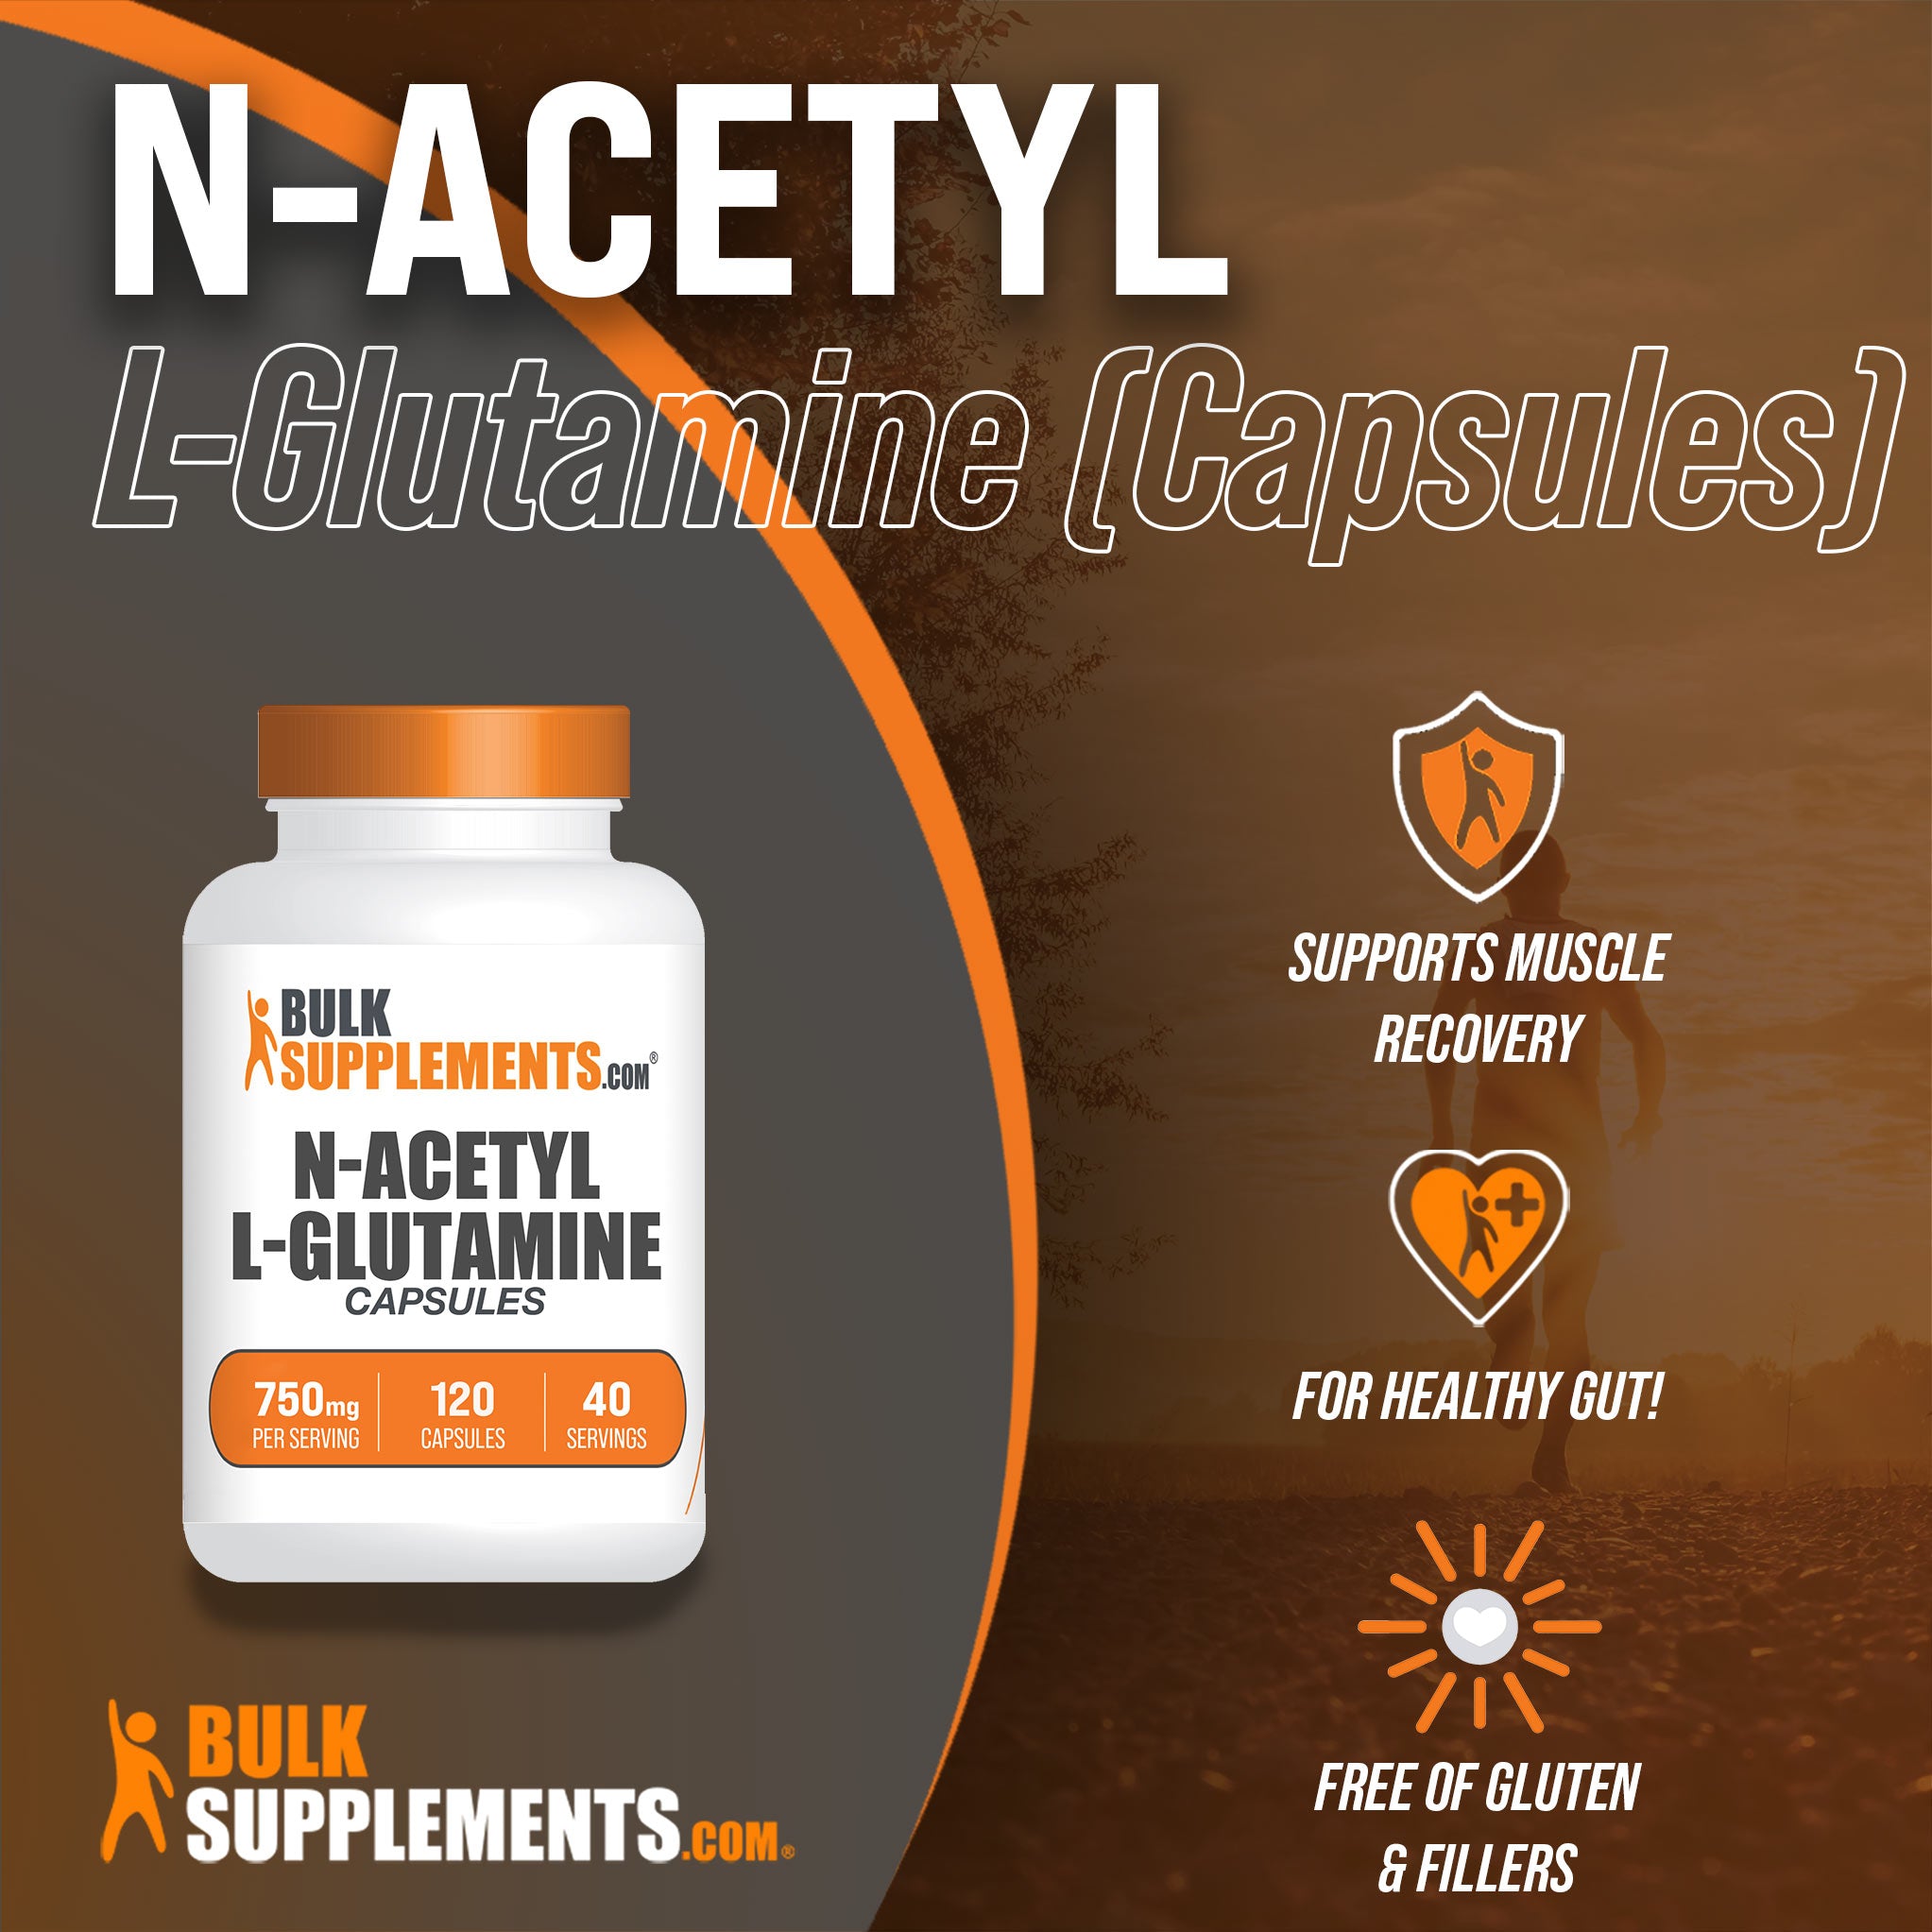 N-아세틸 L-글루타민 캡슐